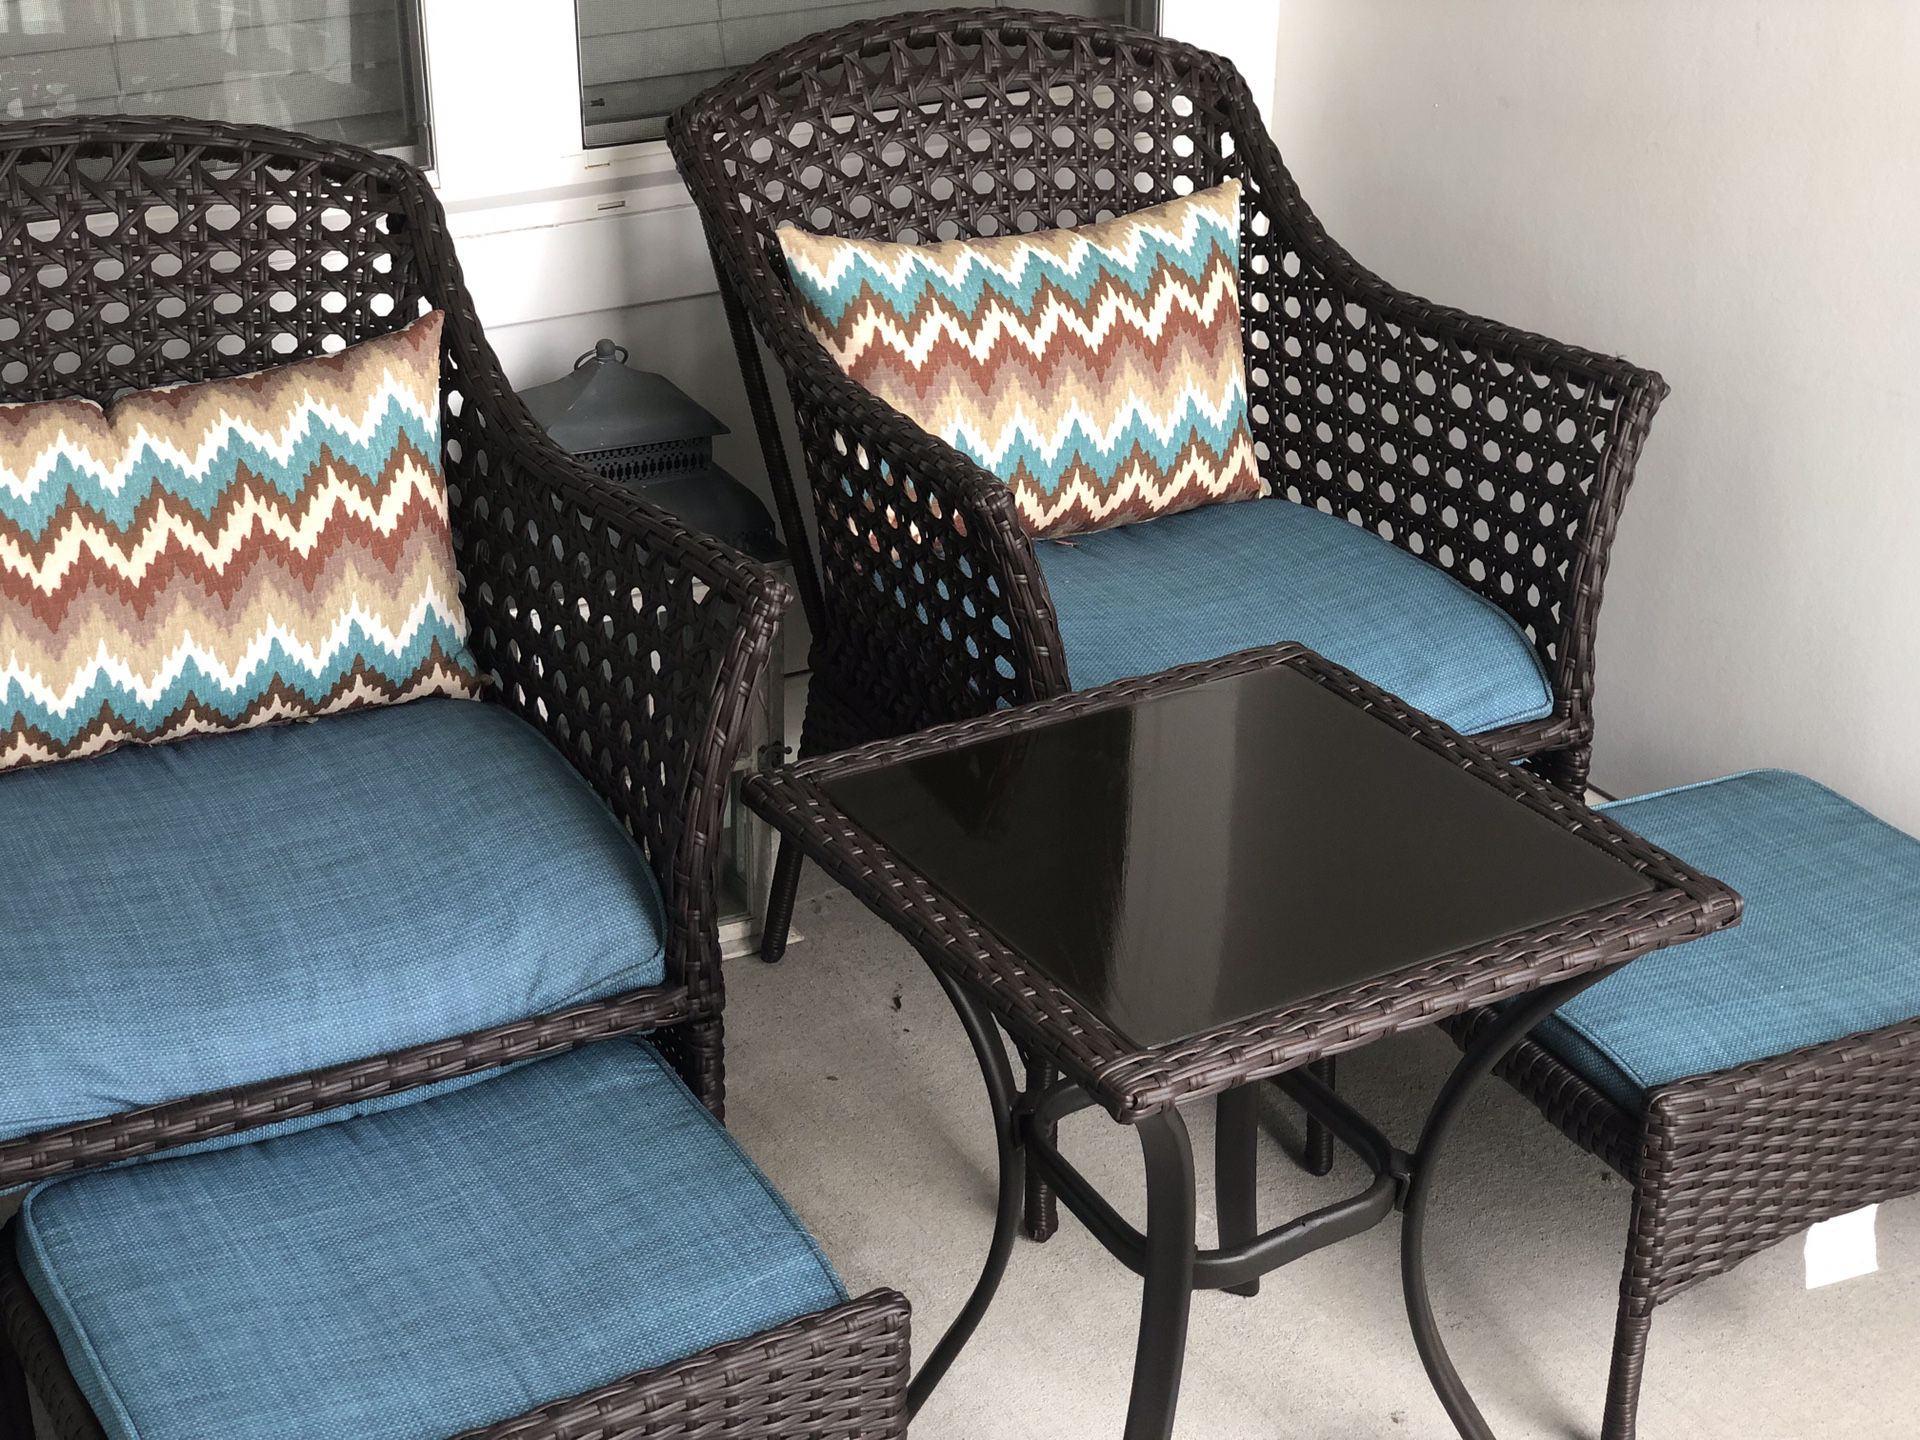 Backyard Classics Bainbridge 3-Piece Wicker Chair Set with Ottoman